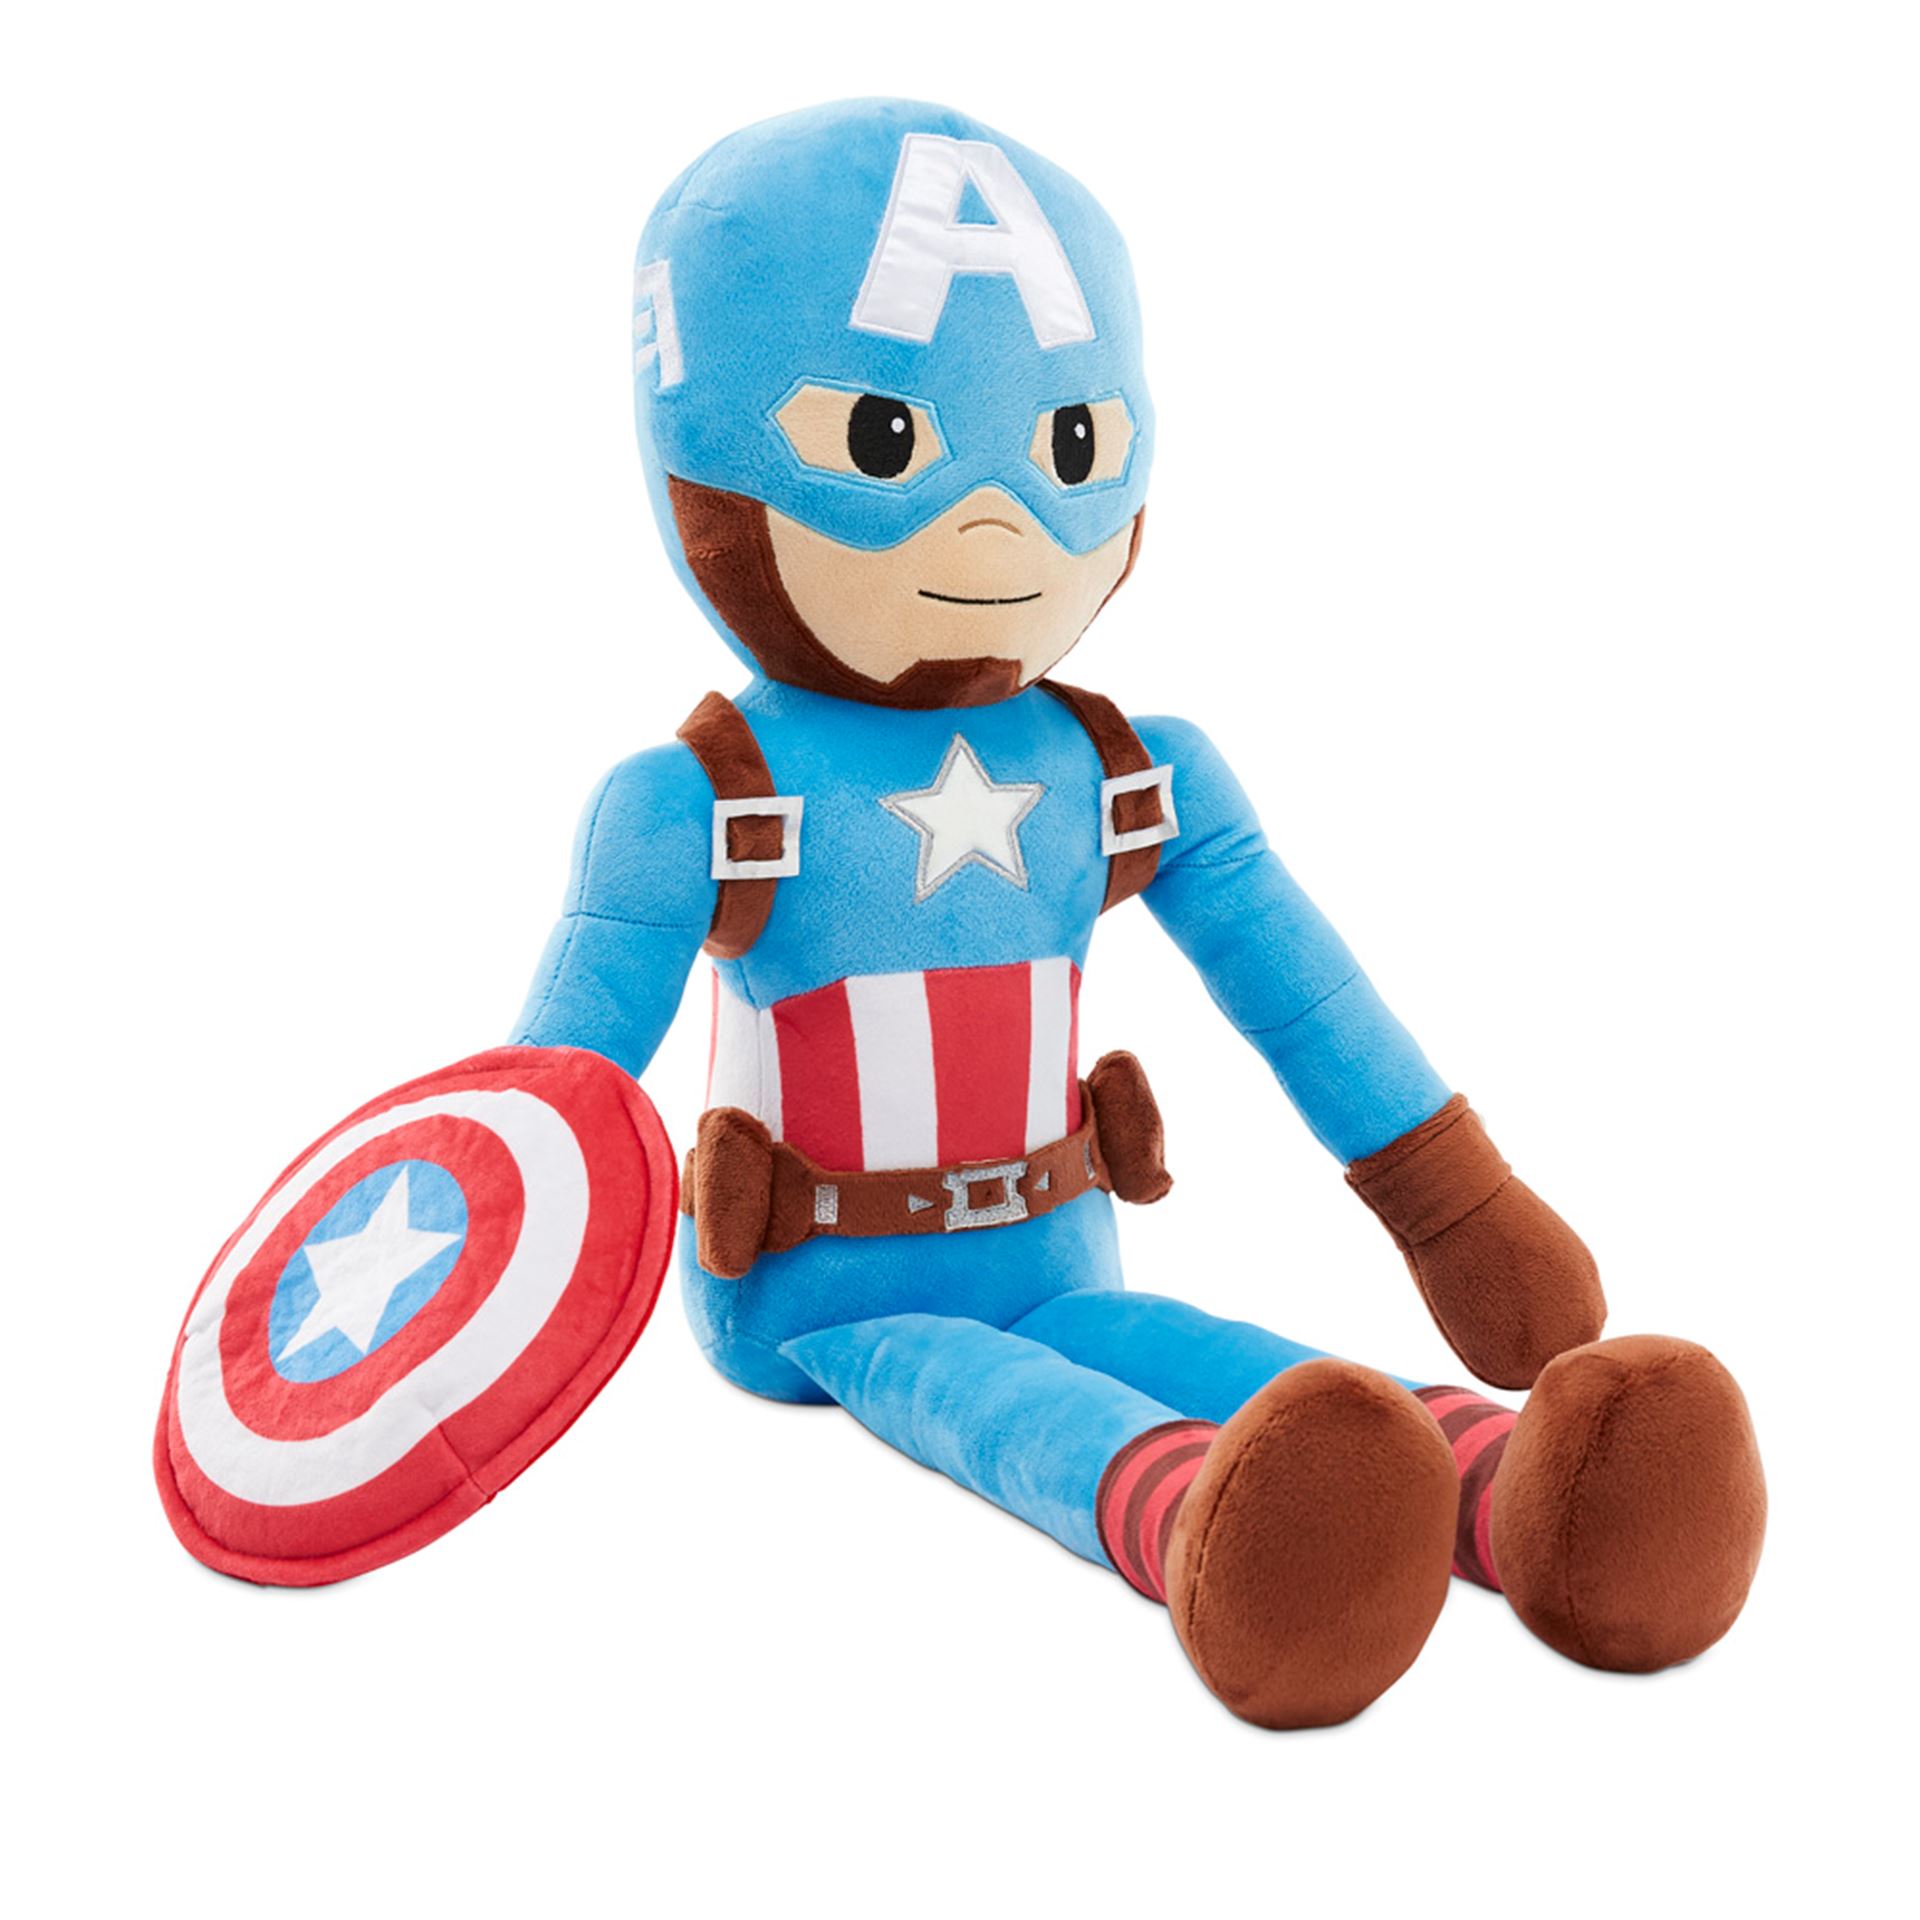 Captain America doll, Collectables, Gumtree Australia Morphett Vale Area  - Flagstaff Hill